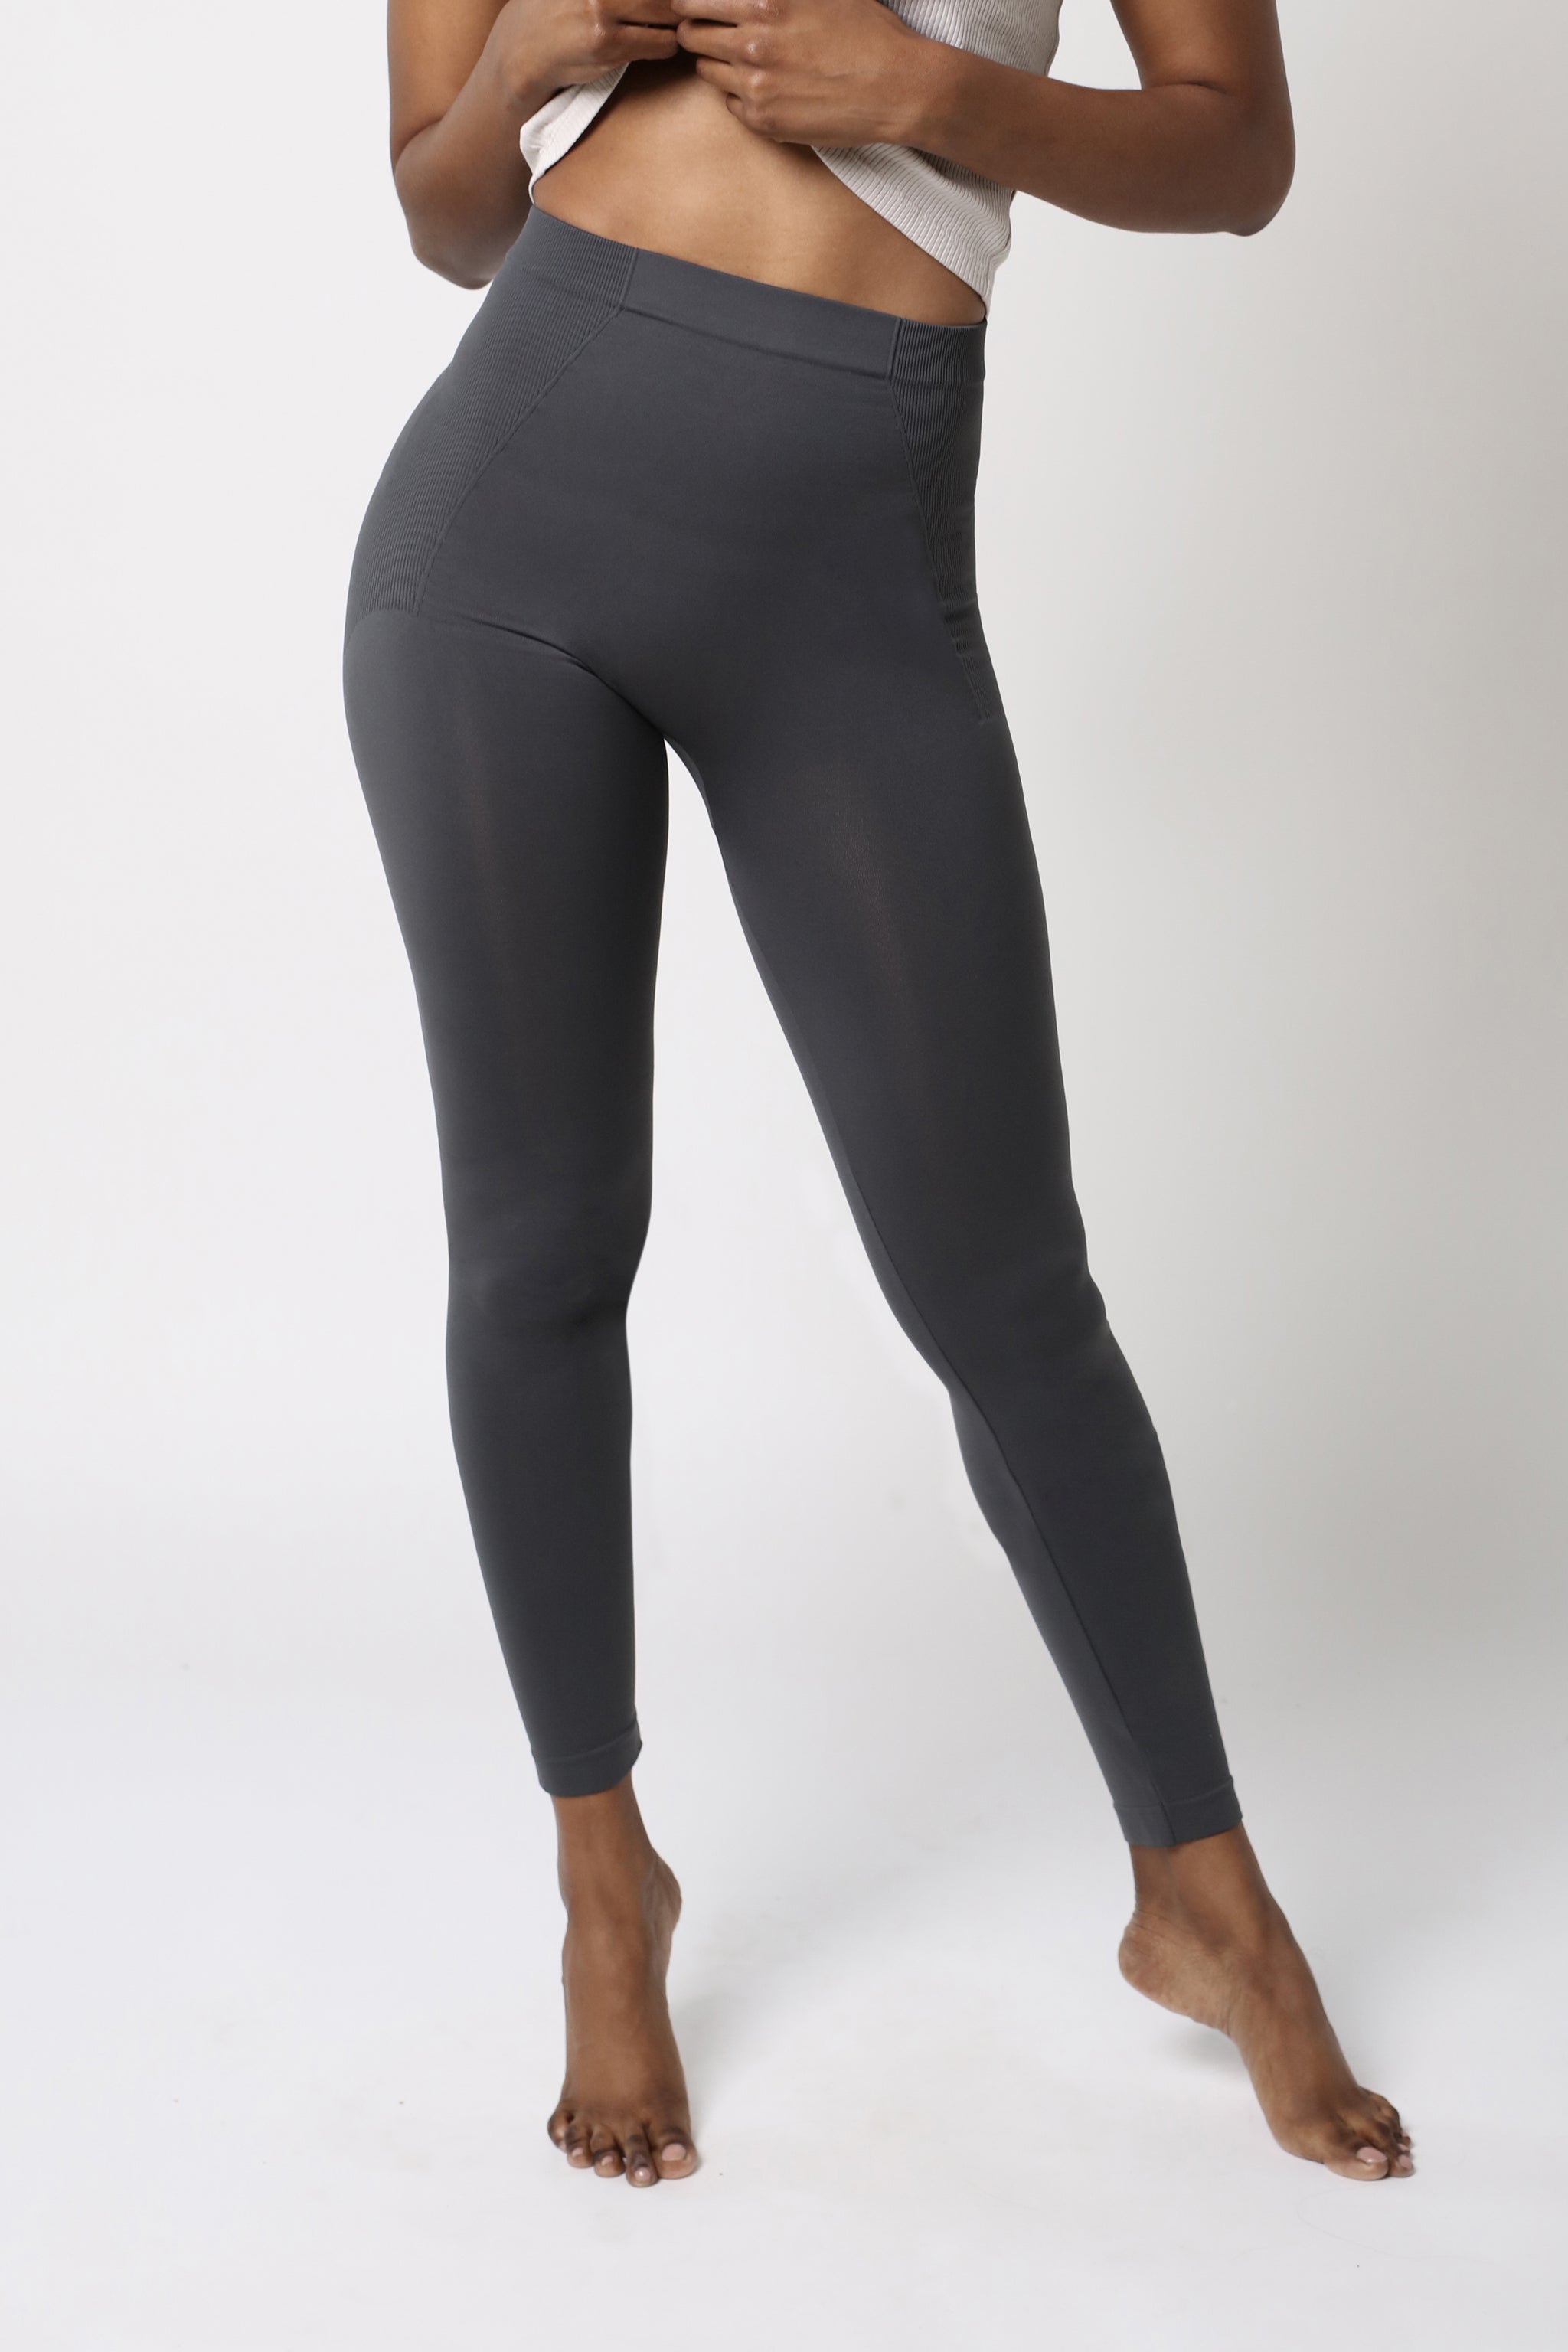 front of shapewear legging - Charcoal grey